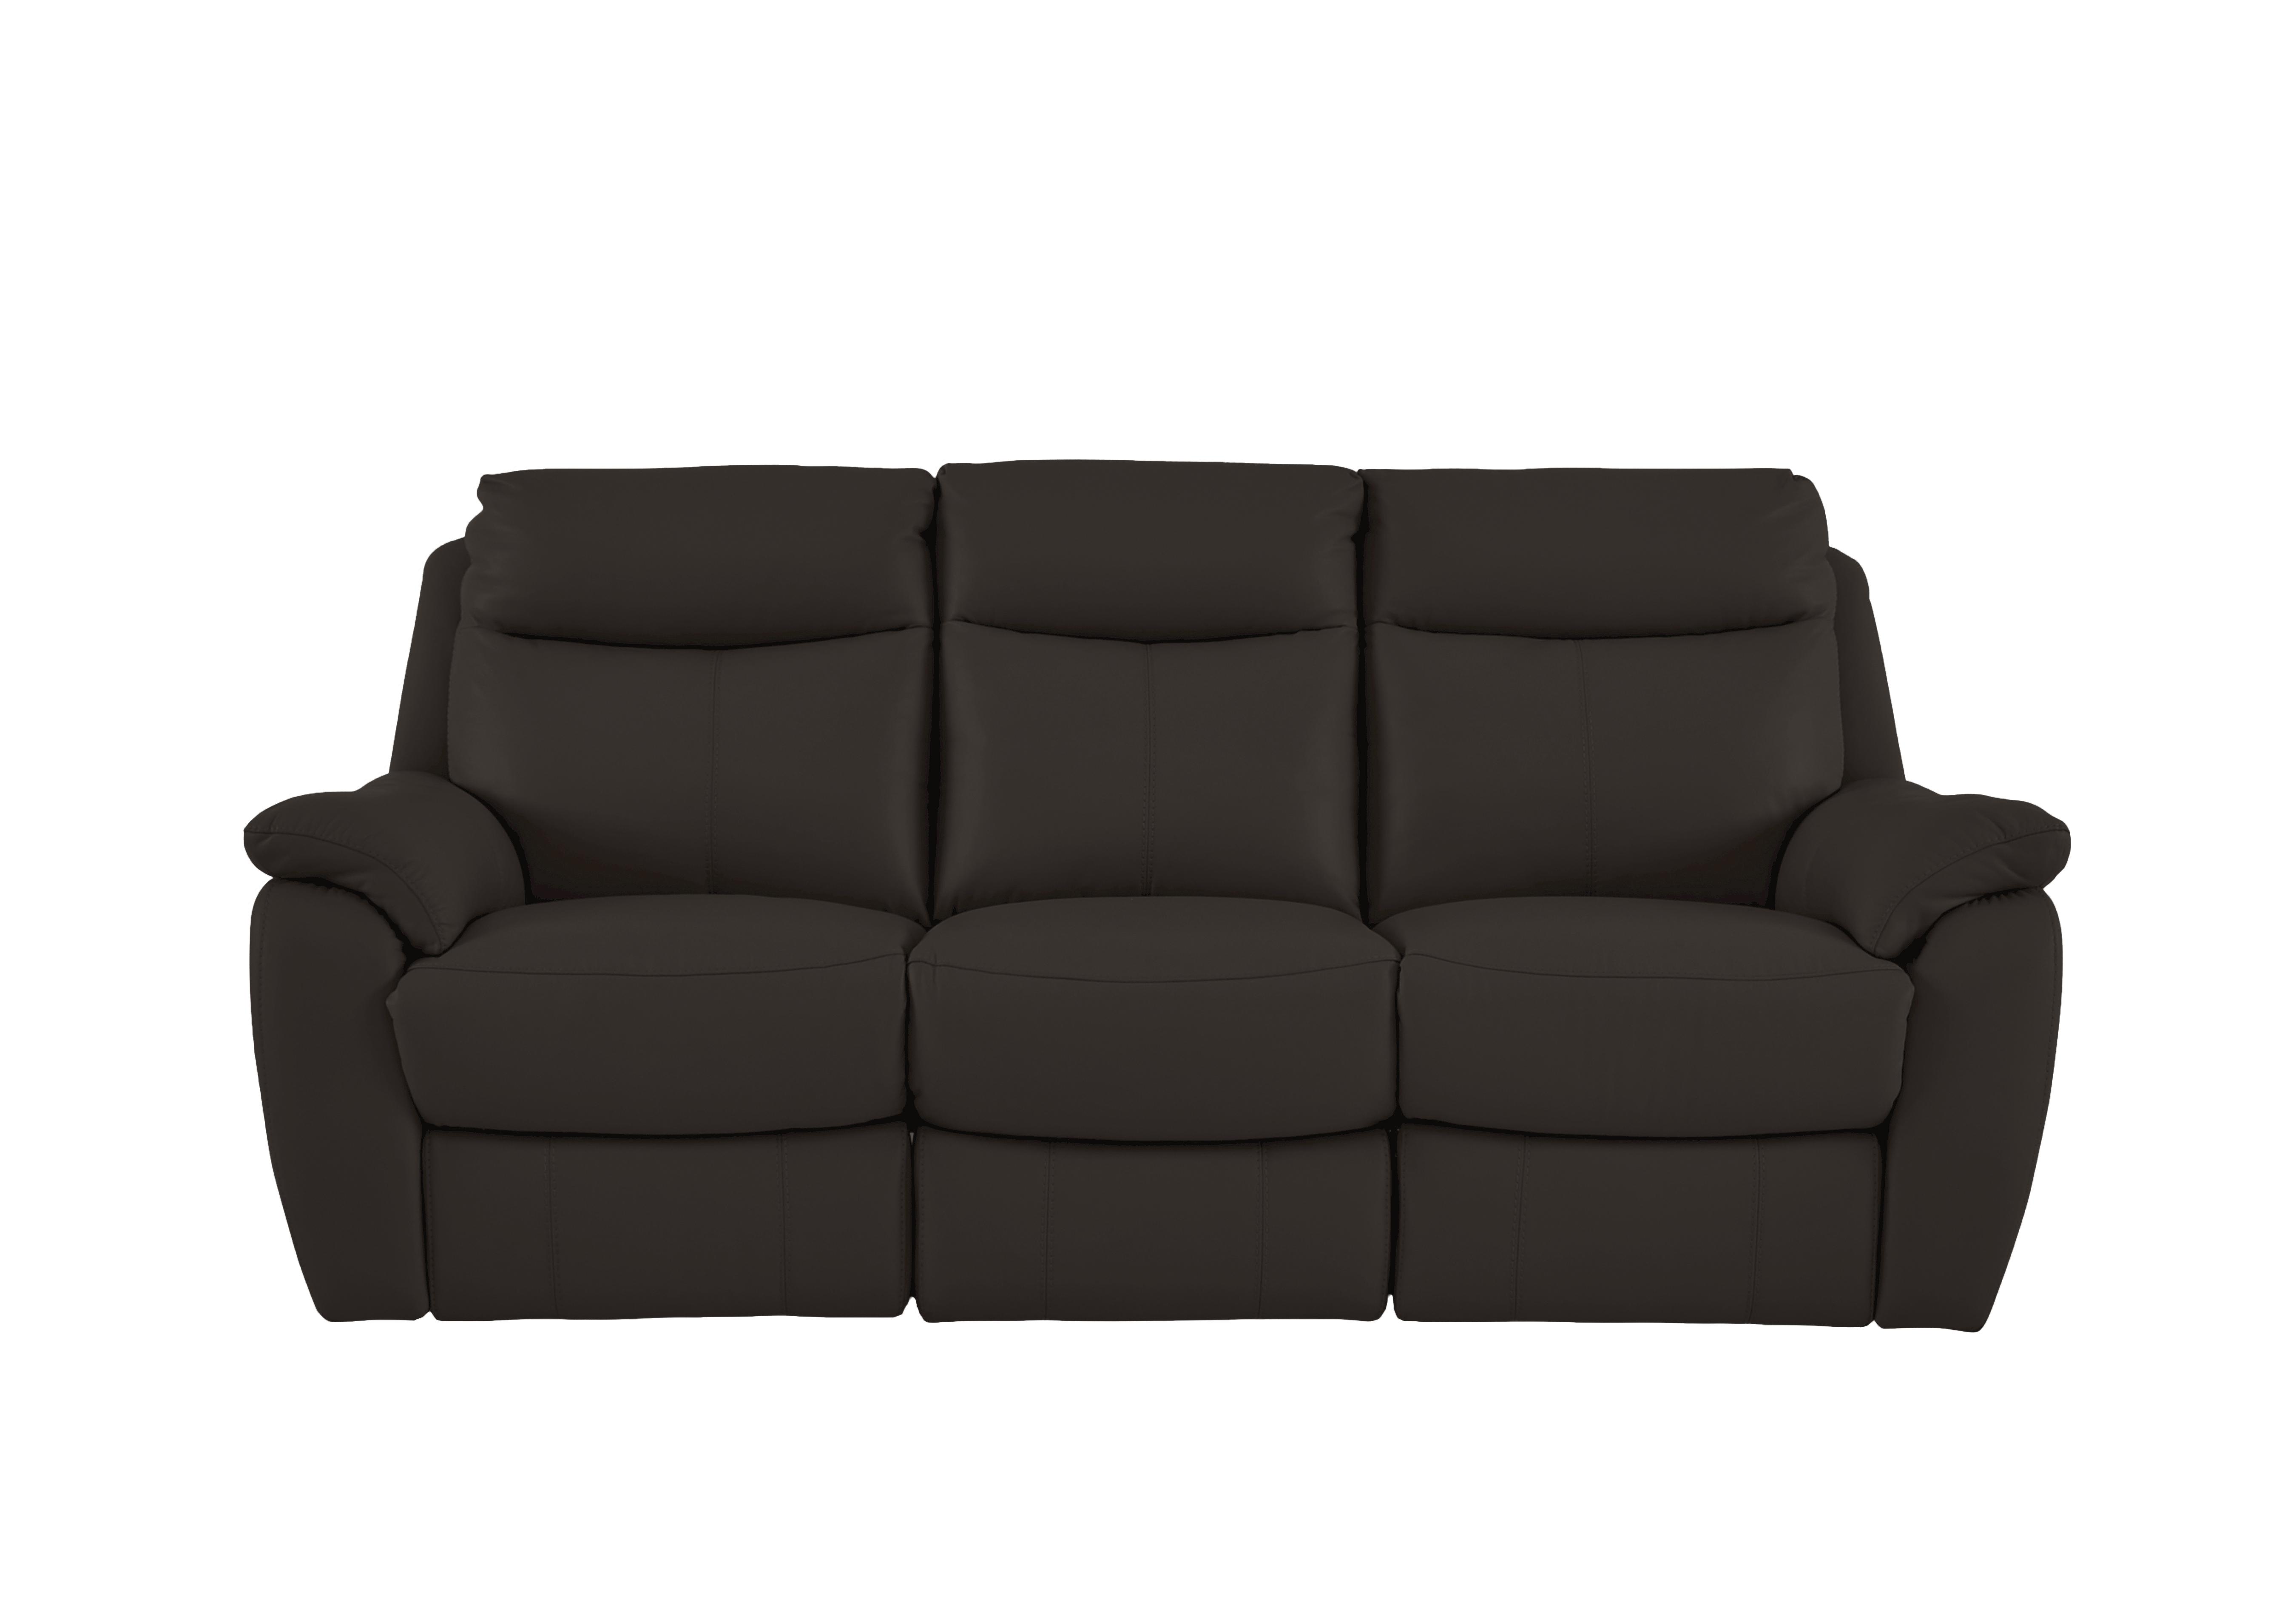 Snug 3 Seater Leather Sofa in Bv-1748 Dark Chocolate on Furniture Village